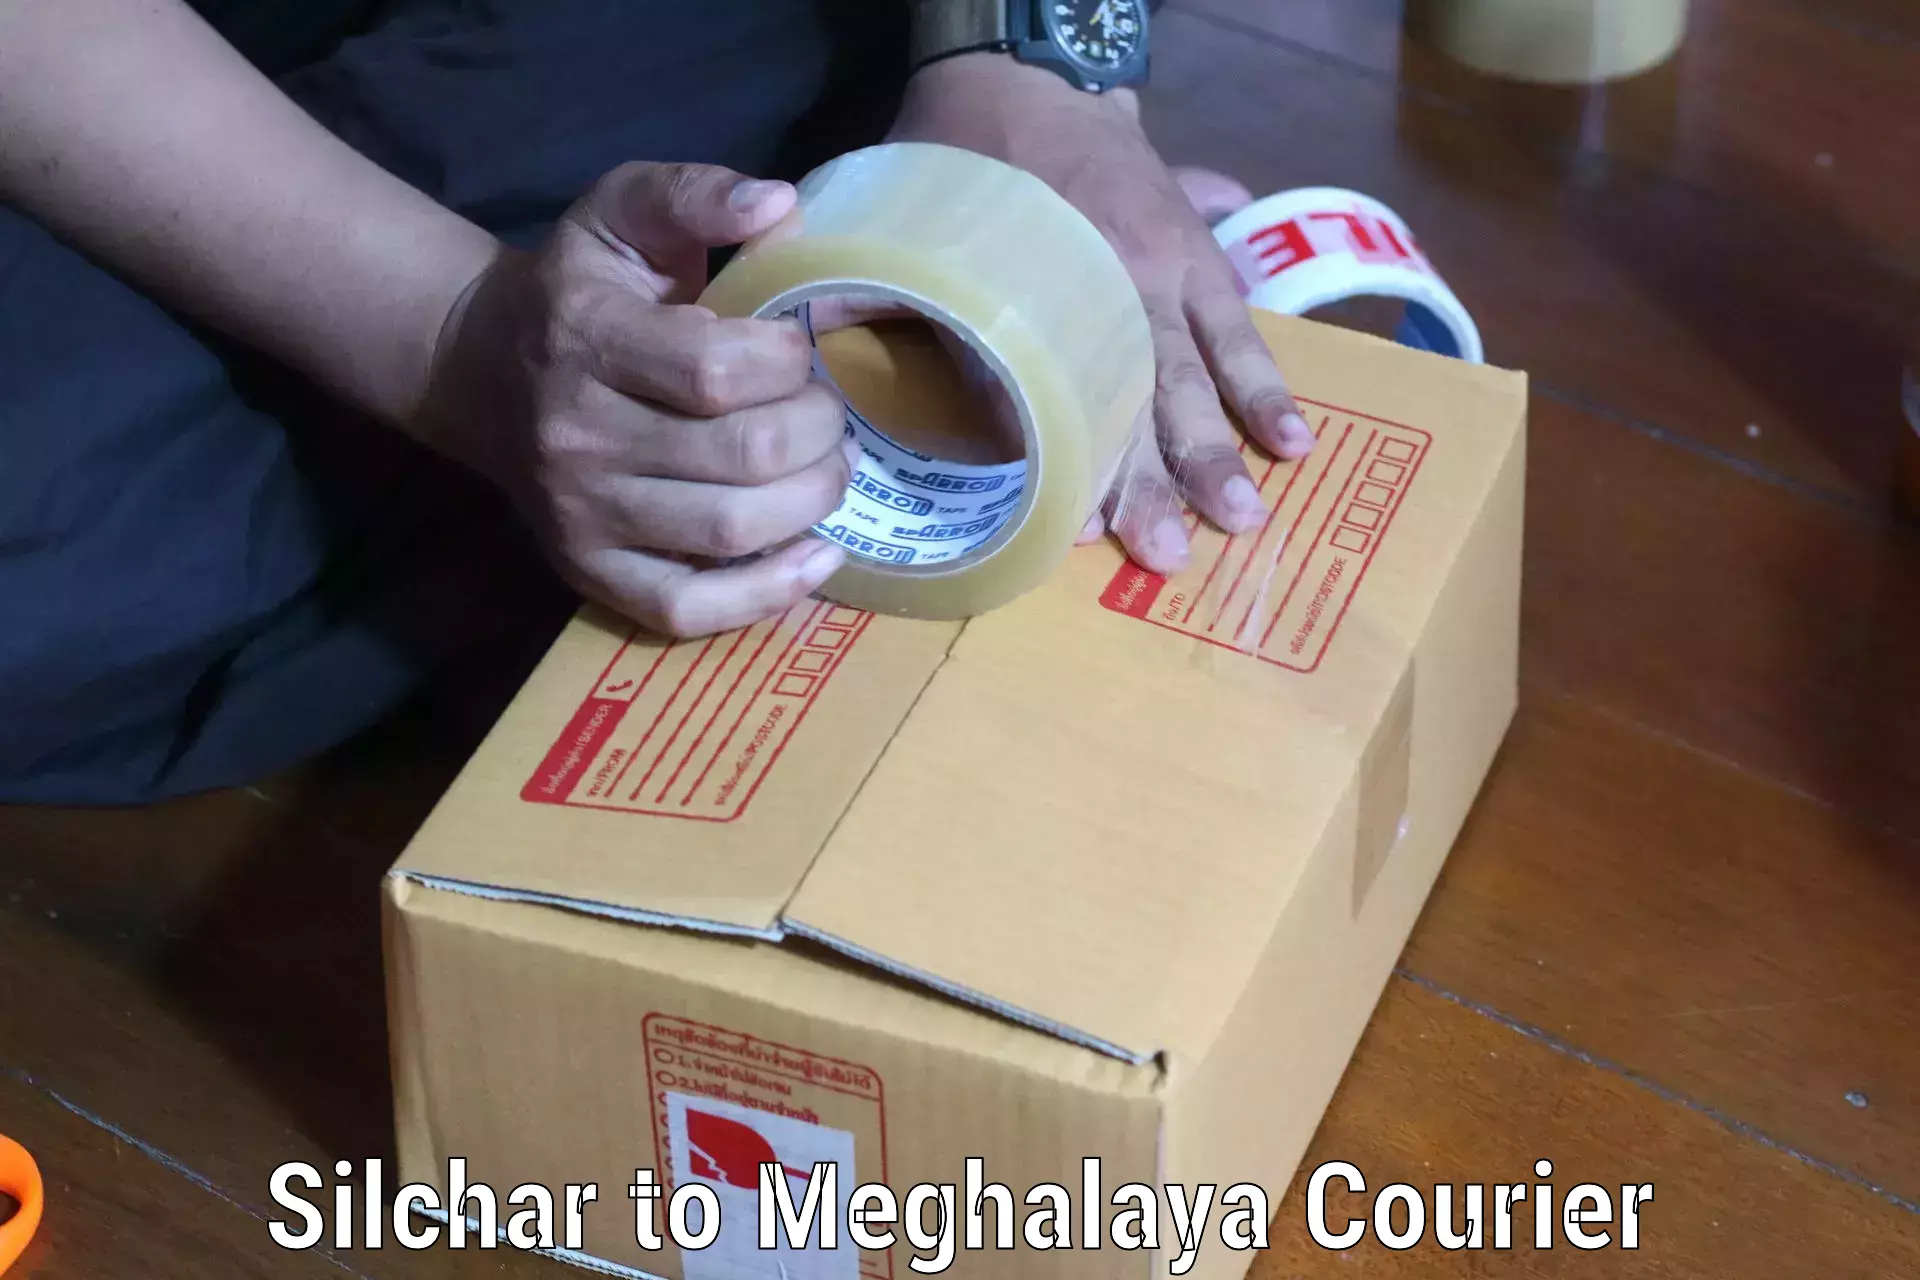 24/7 courier service Silchar to Shillong